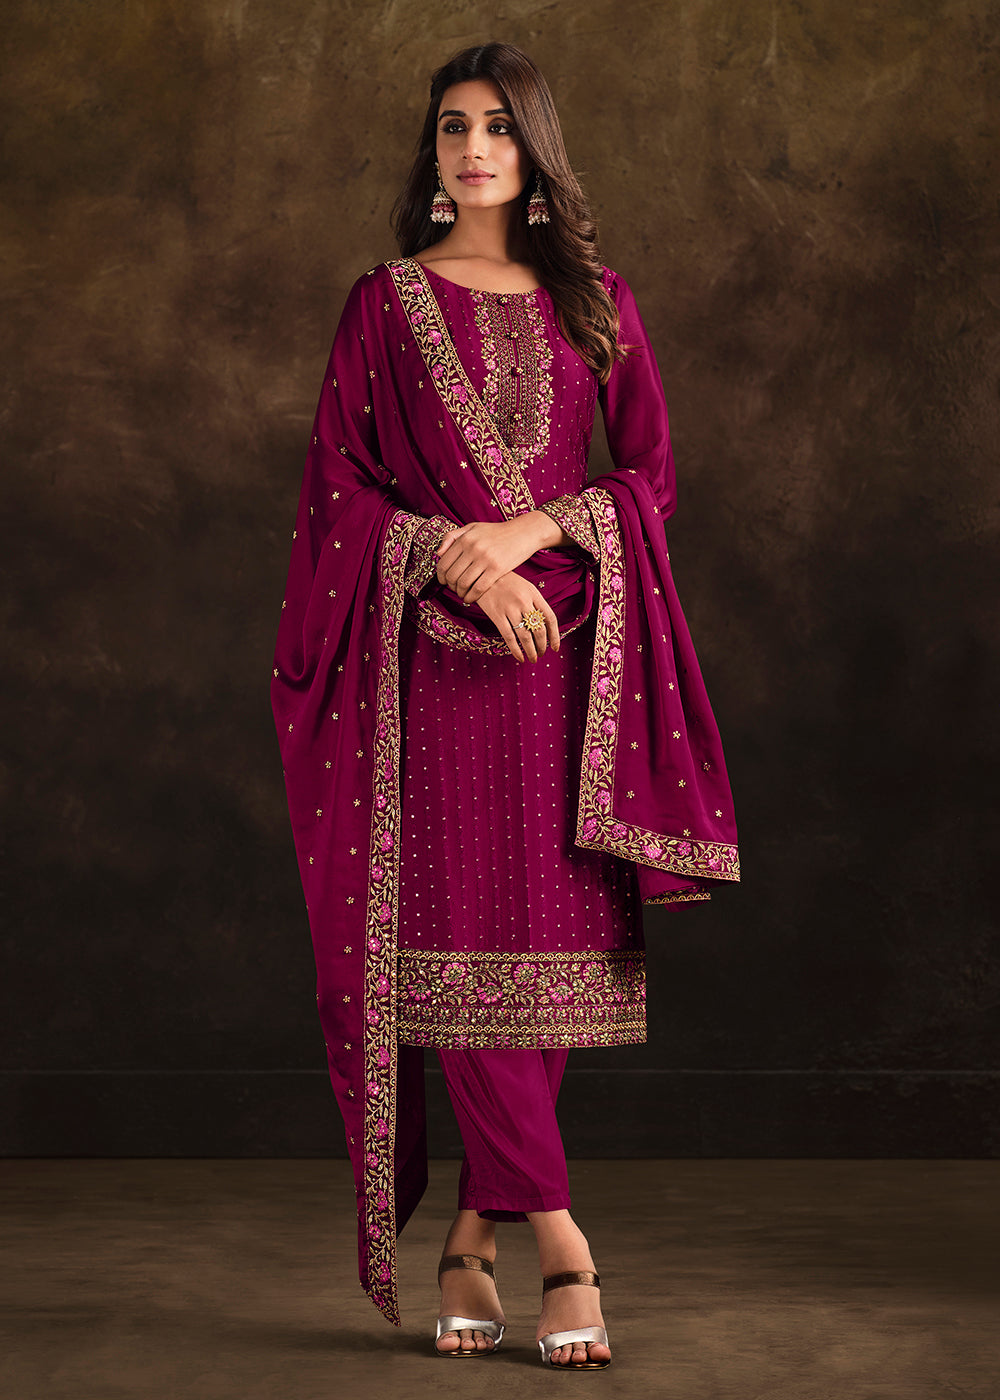 Buy Now Fancy Georgette Elegant Magenta Pakistani Style Salwar Suit Online in USA, UK, Canada, Germany, Australia & Worldwide at Empress Clothing.